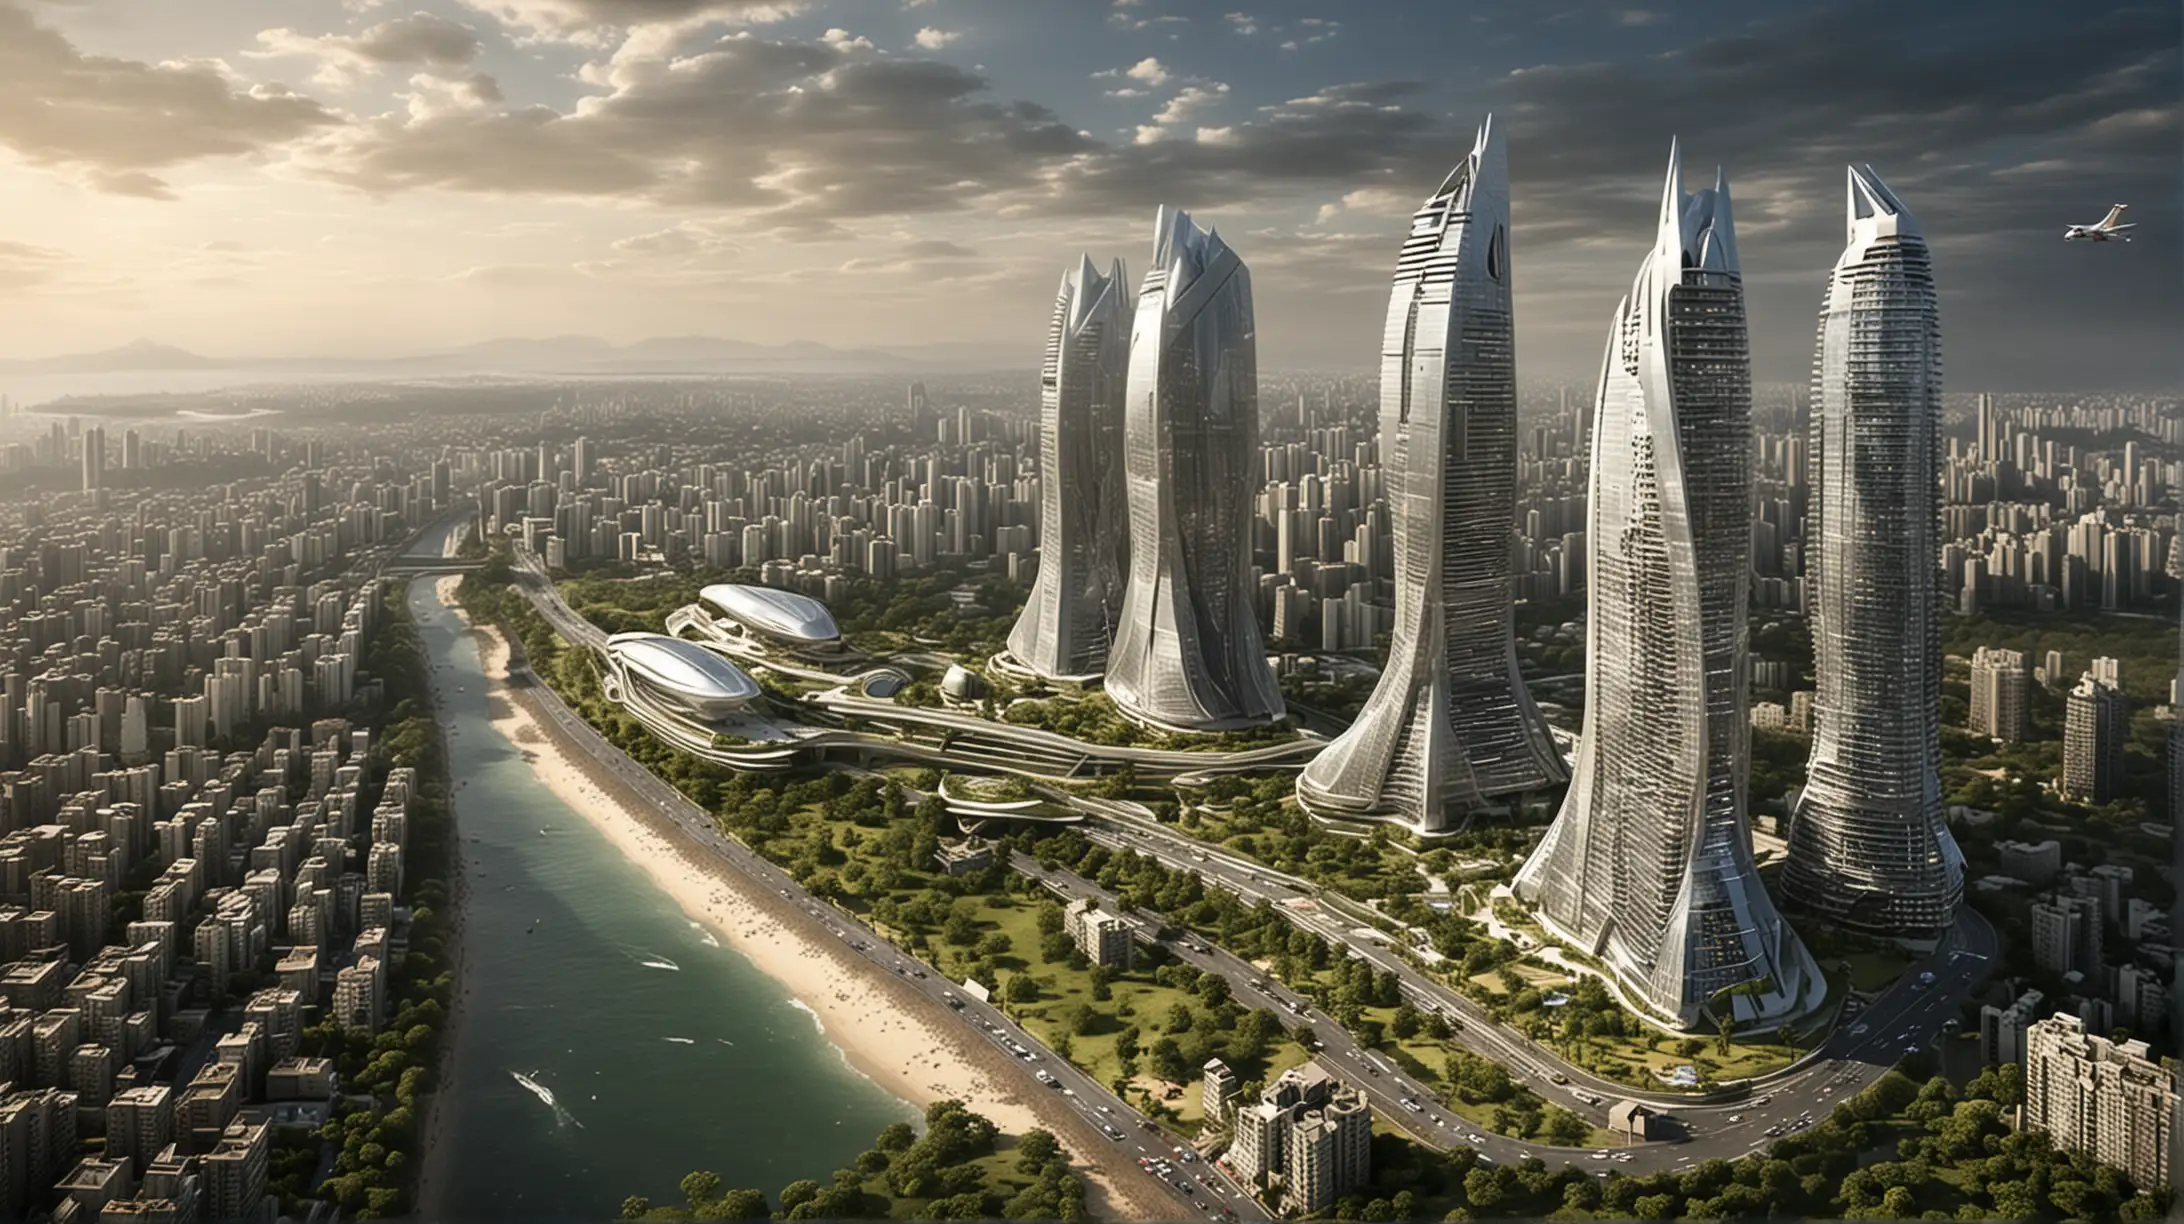 Futuristic Mega Project in Mumbai India Architectural Marvels and Urban Innovation